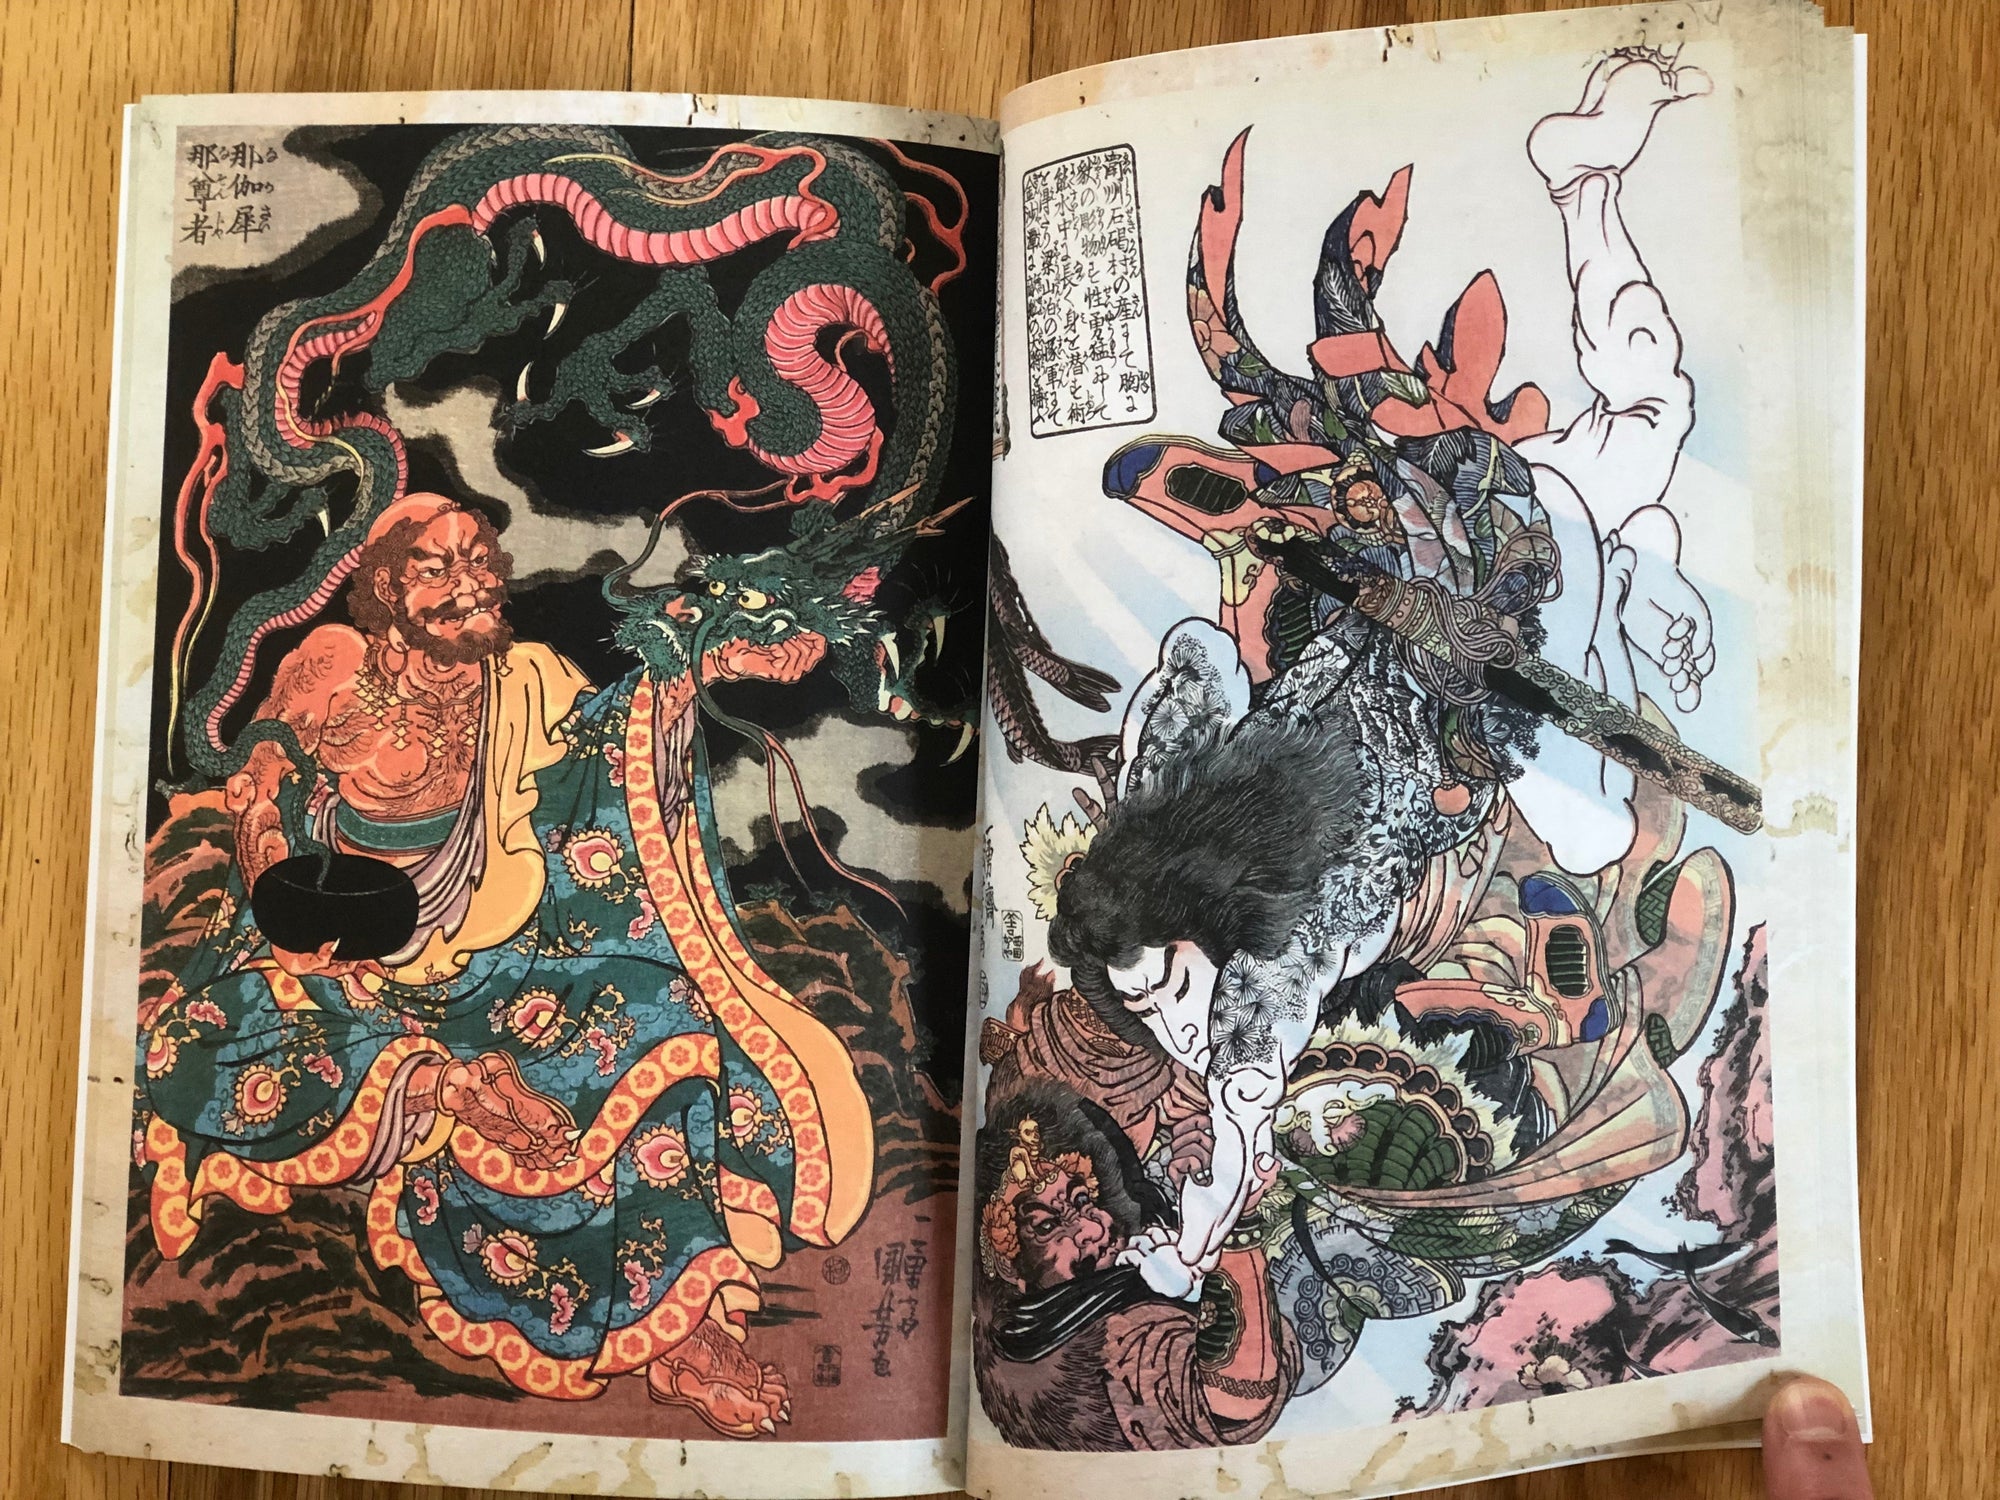 PLUS – Aotobeni Art Book & Illustration Make-Up Technique – Japanese  Creative Bookstore